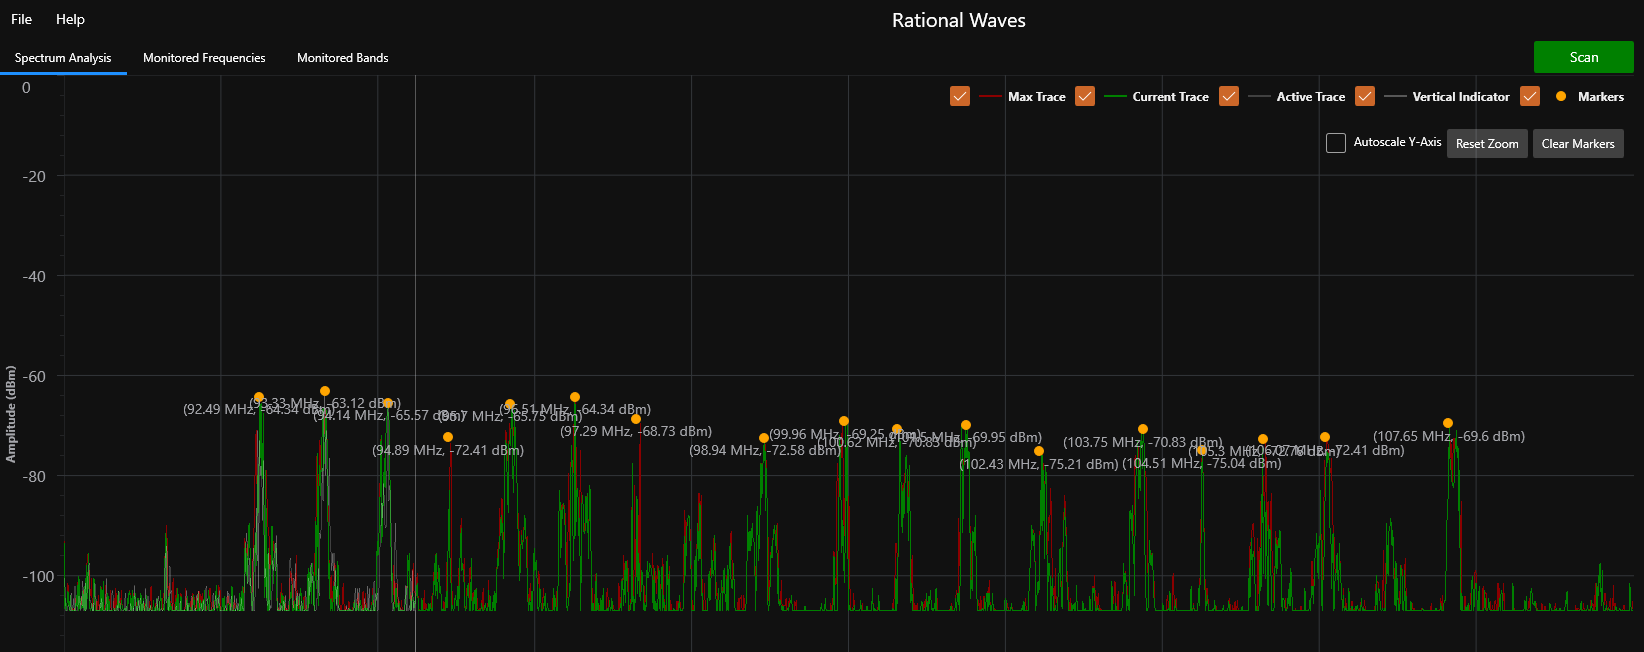 Rational Waves RF Spectrum Analyzer Software